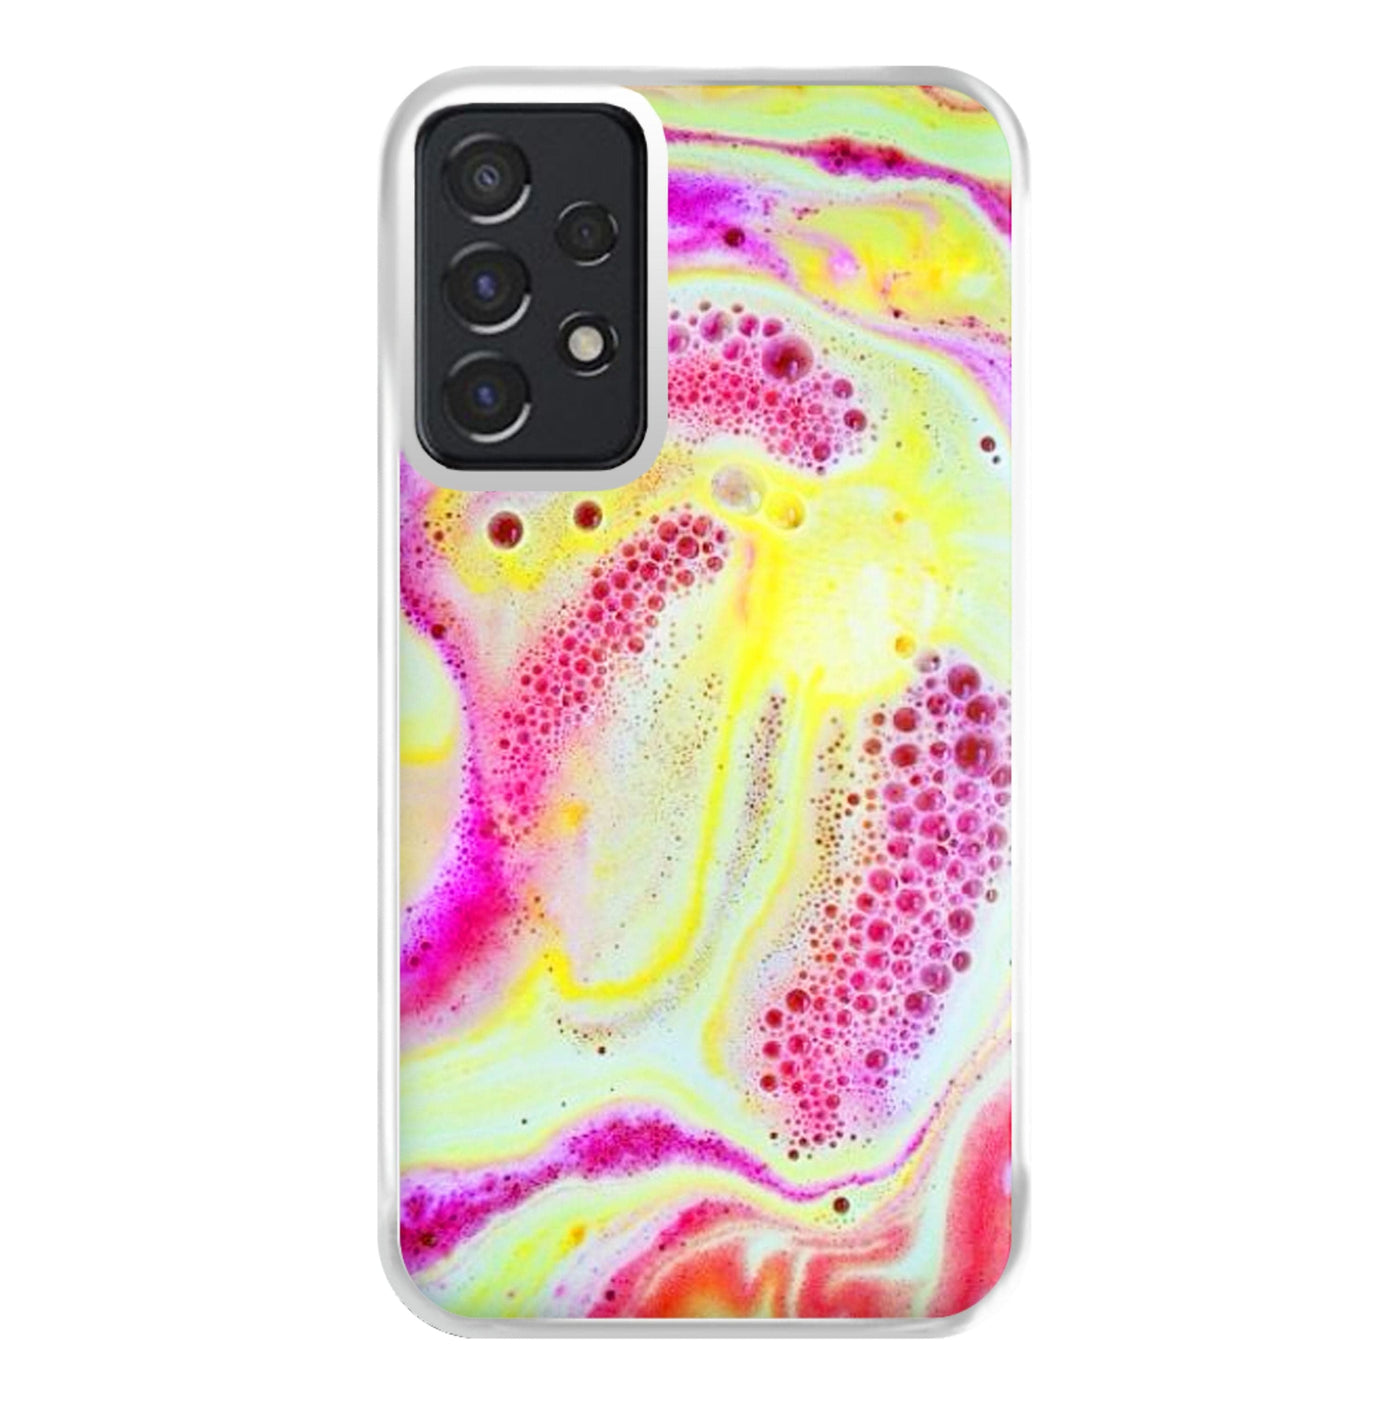 Super Colourful Bath Bomb Pattern Phone Case